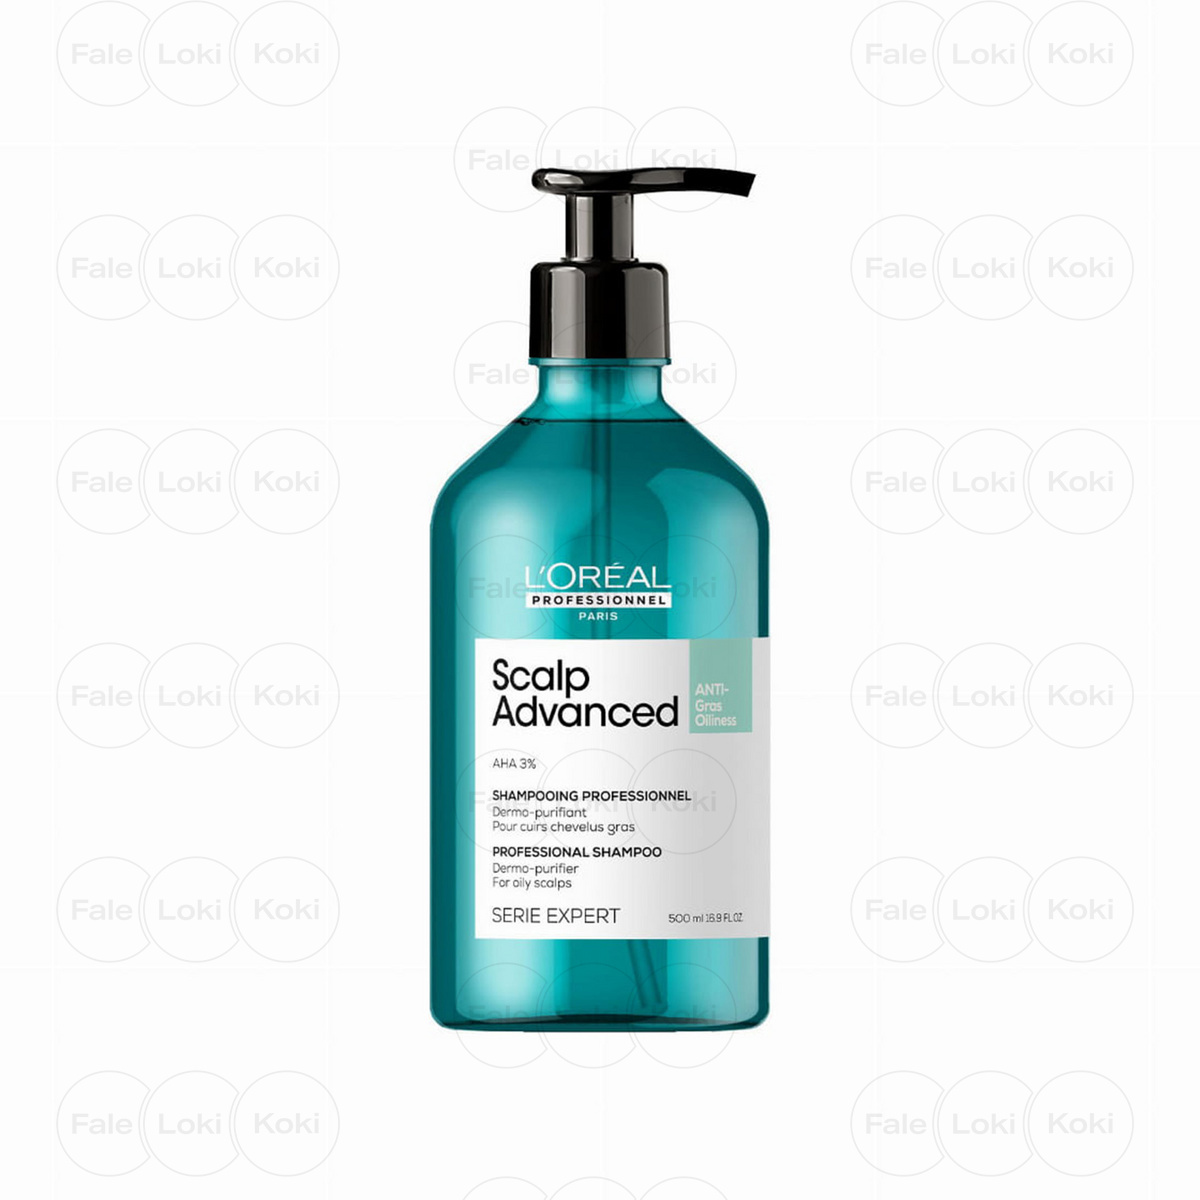 szampon loreal scalp specialist